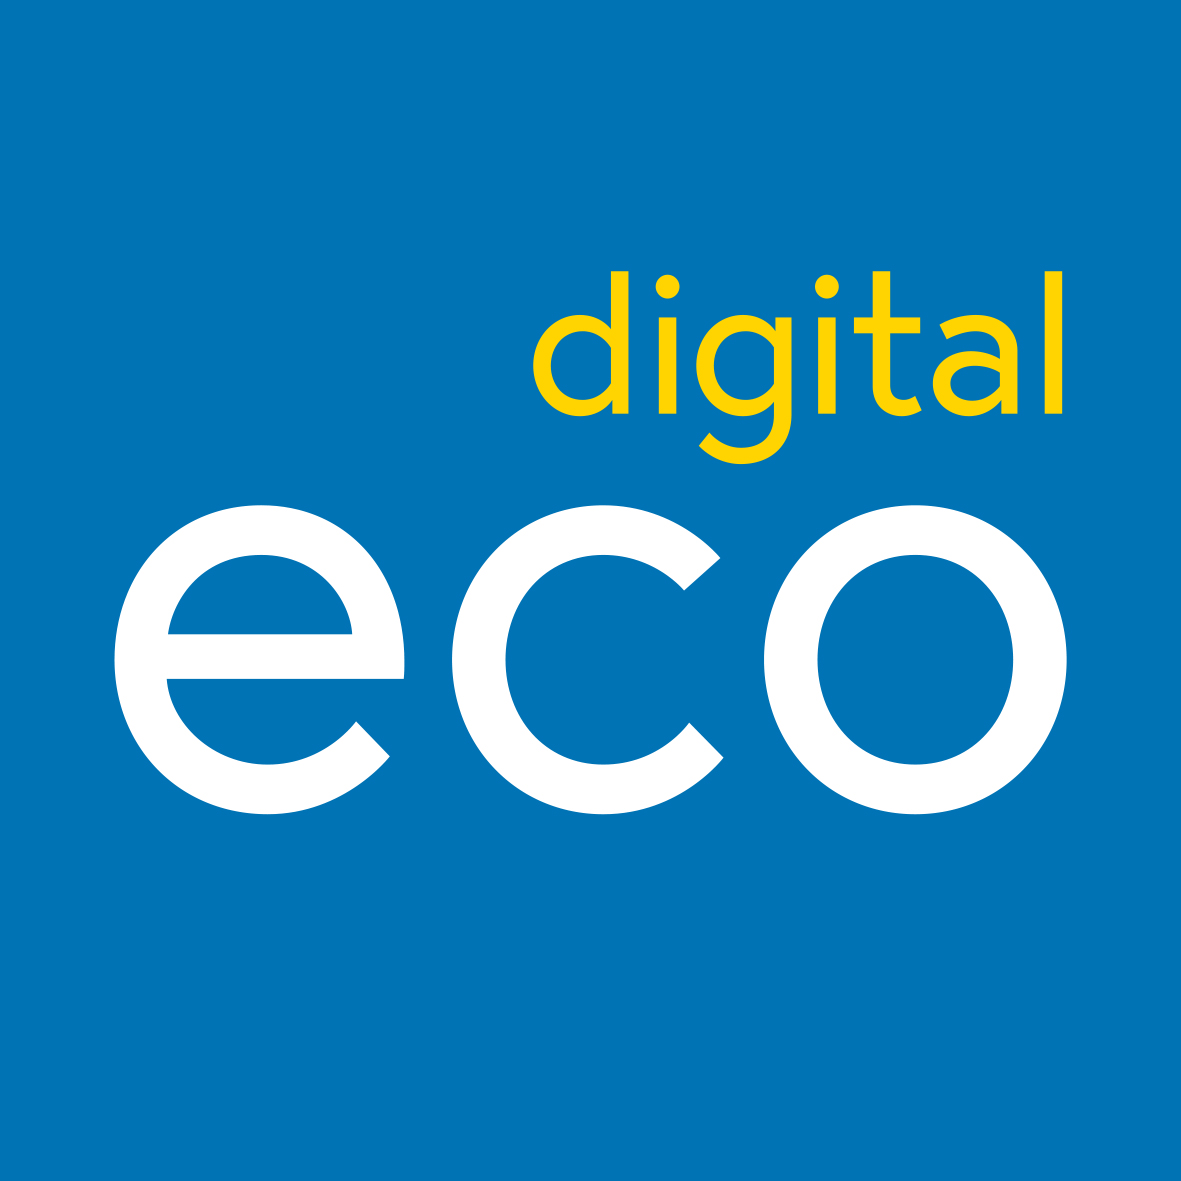 Digital eco